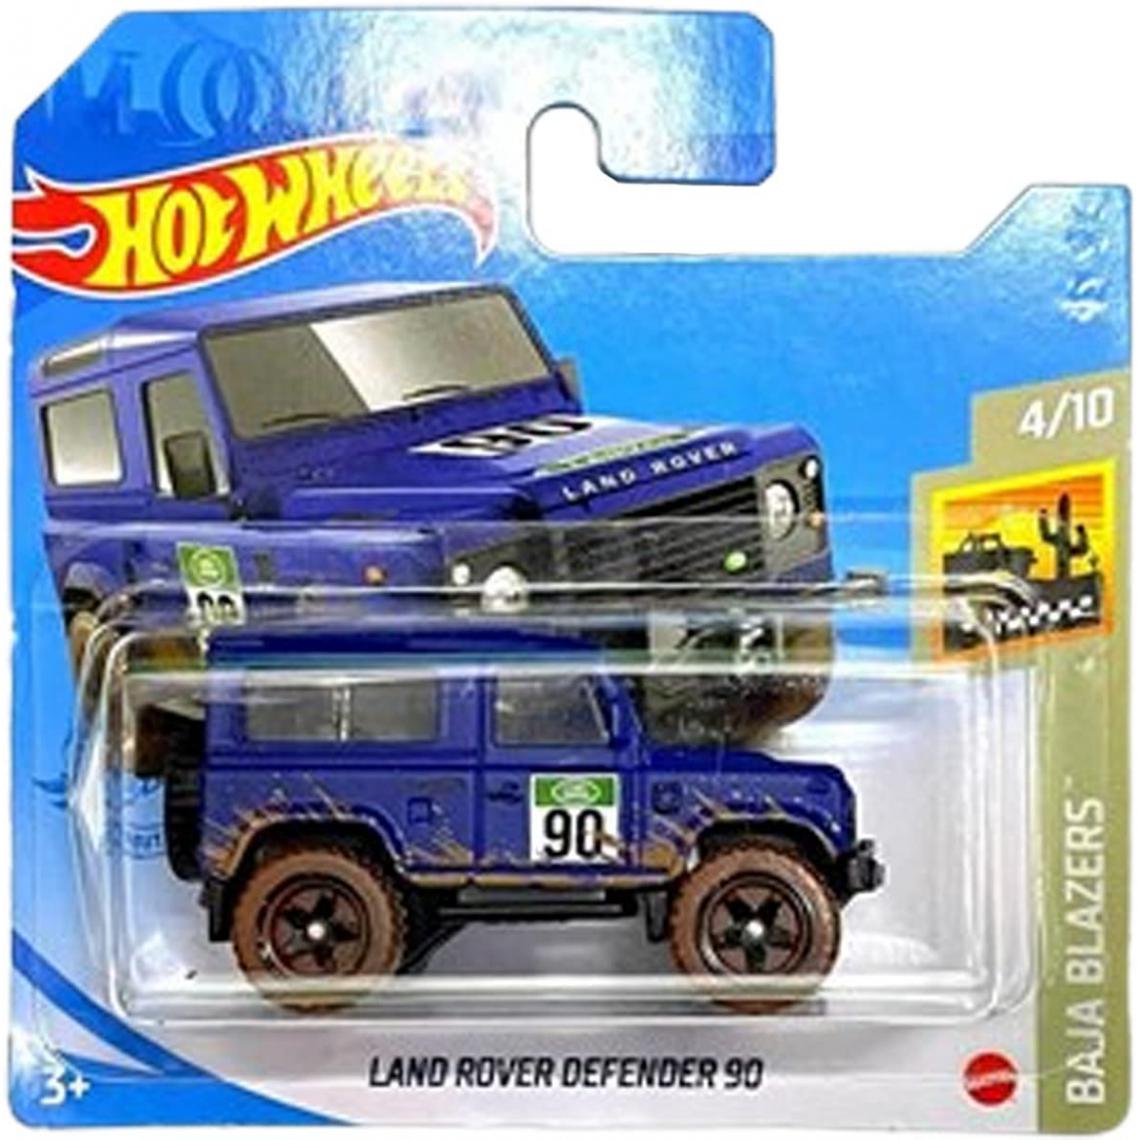 Hot Wheels - véhicule Land Rover Defender 90 Baja Blazers 4/10 - Voiture de collection miniature